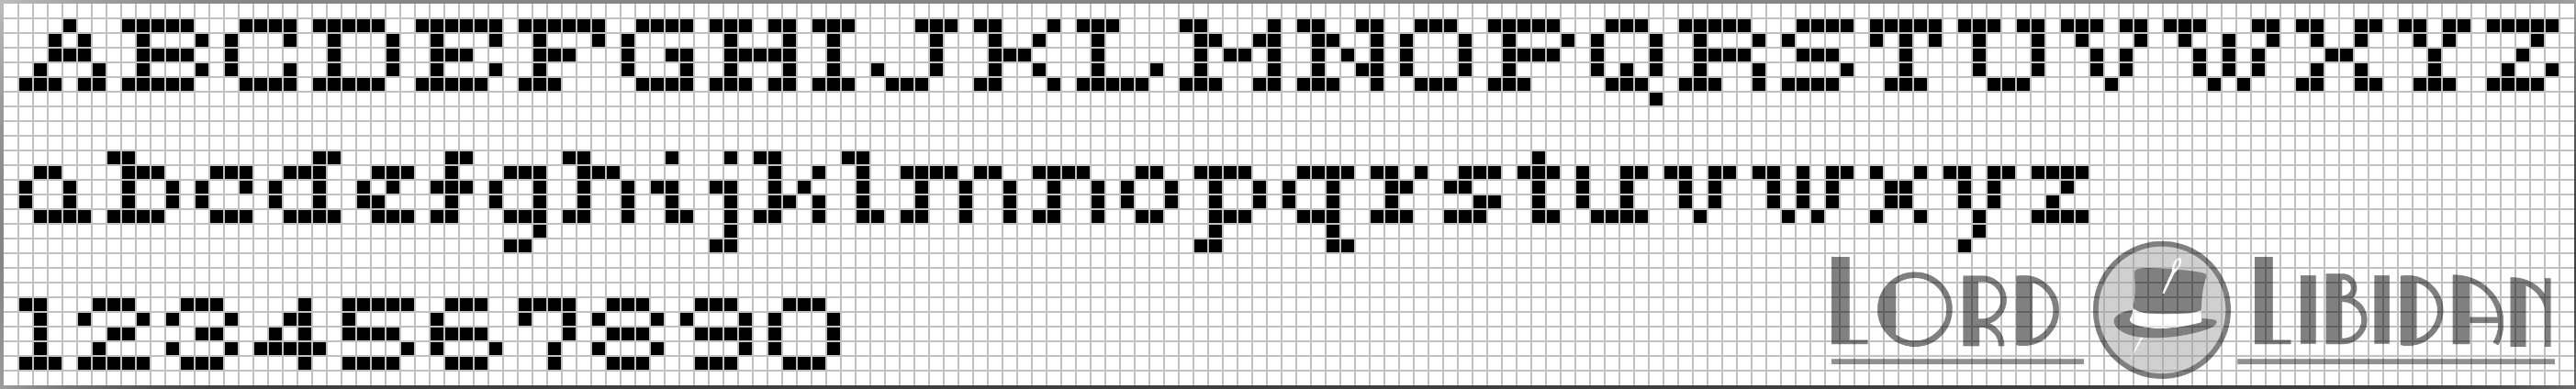 Minature Cross Stitch Alphabet Pattern Free Download By Lord Libidan